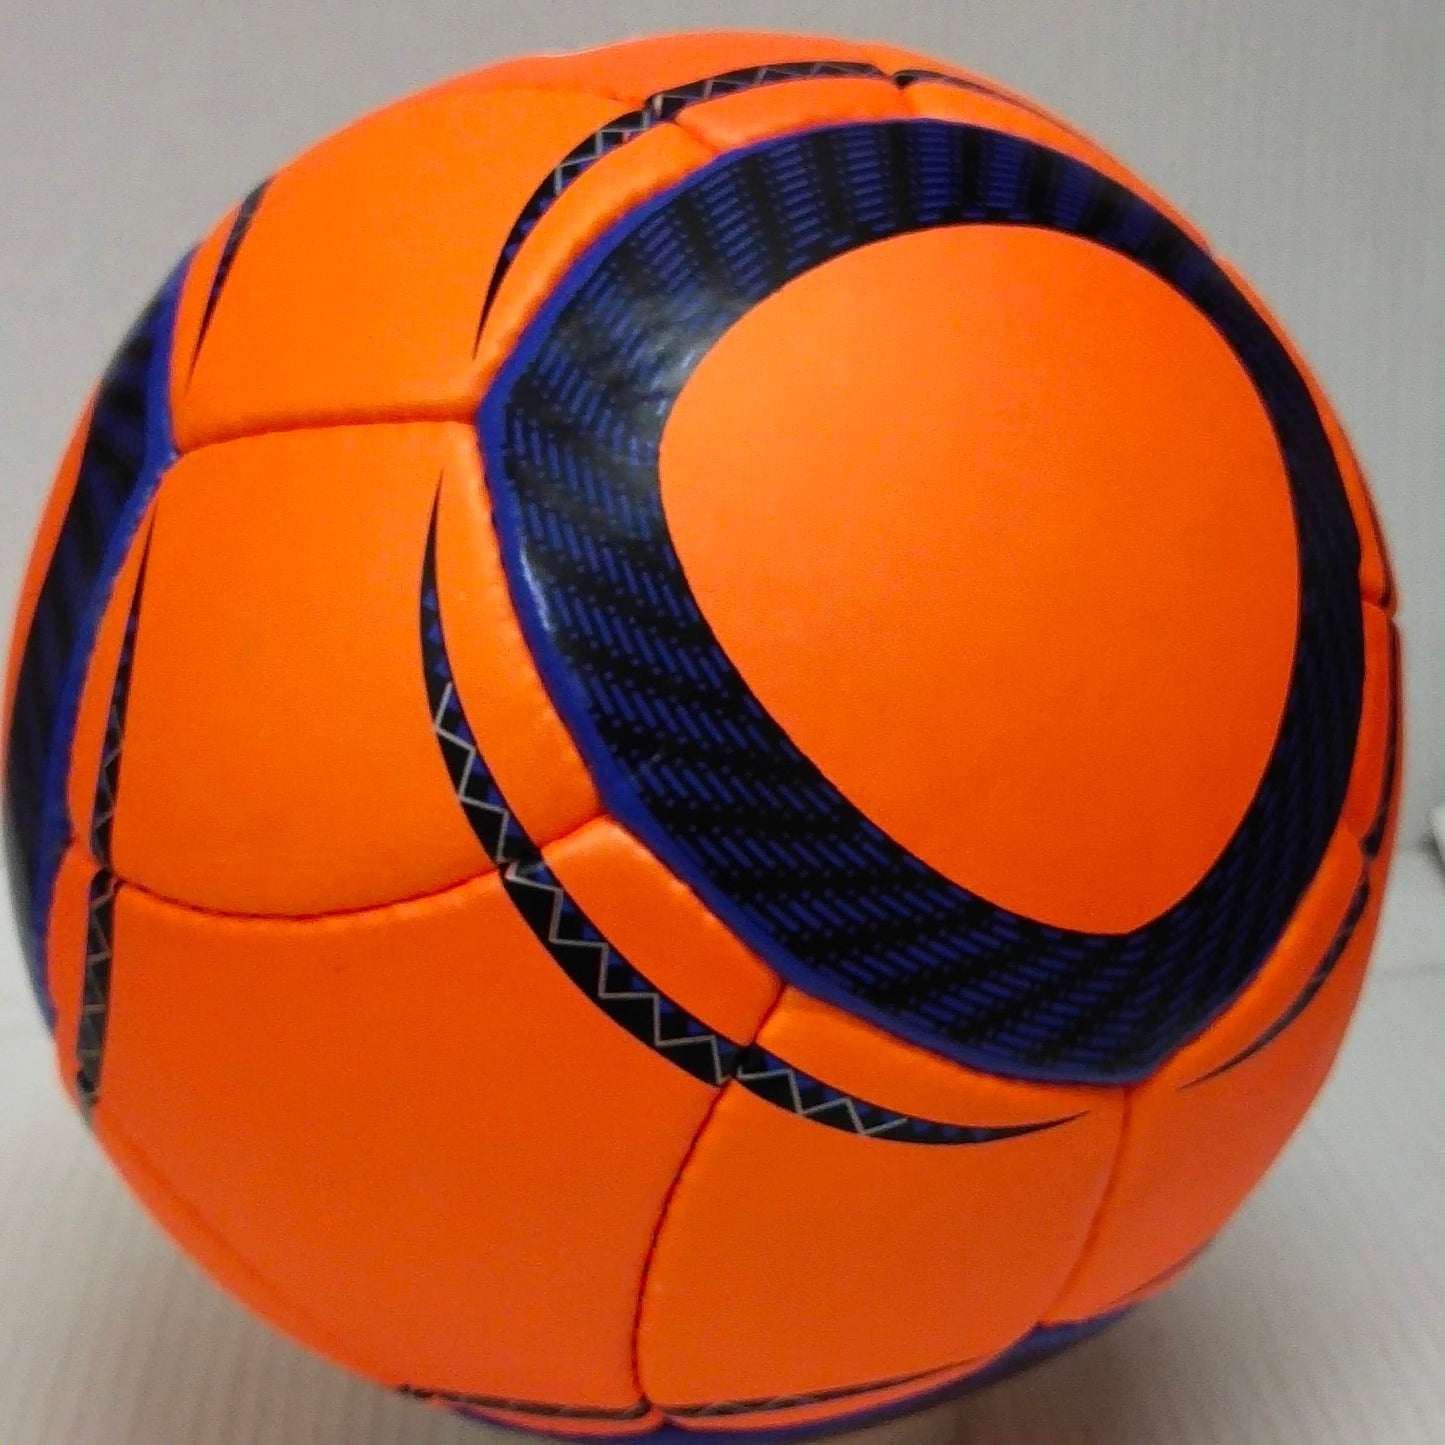 Adidas Jabulani | FIFA World Cup 2010 | Winter Edition | Orange Ball | SIZE 5 05